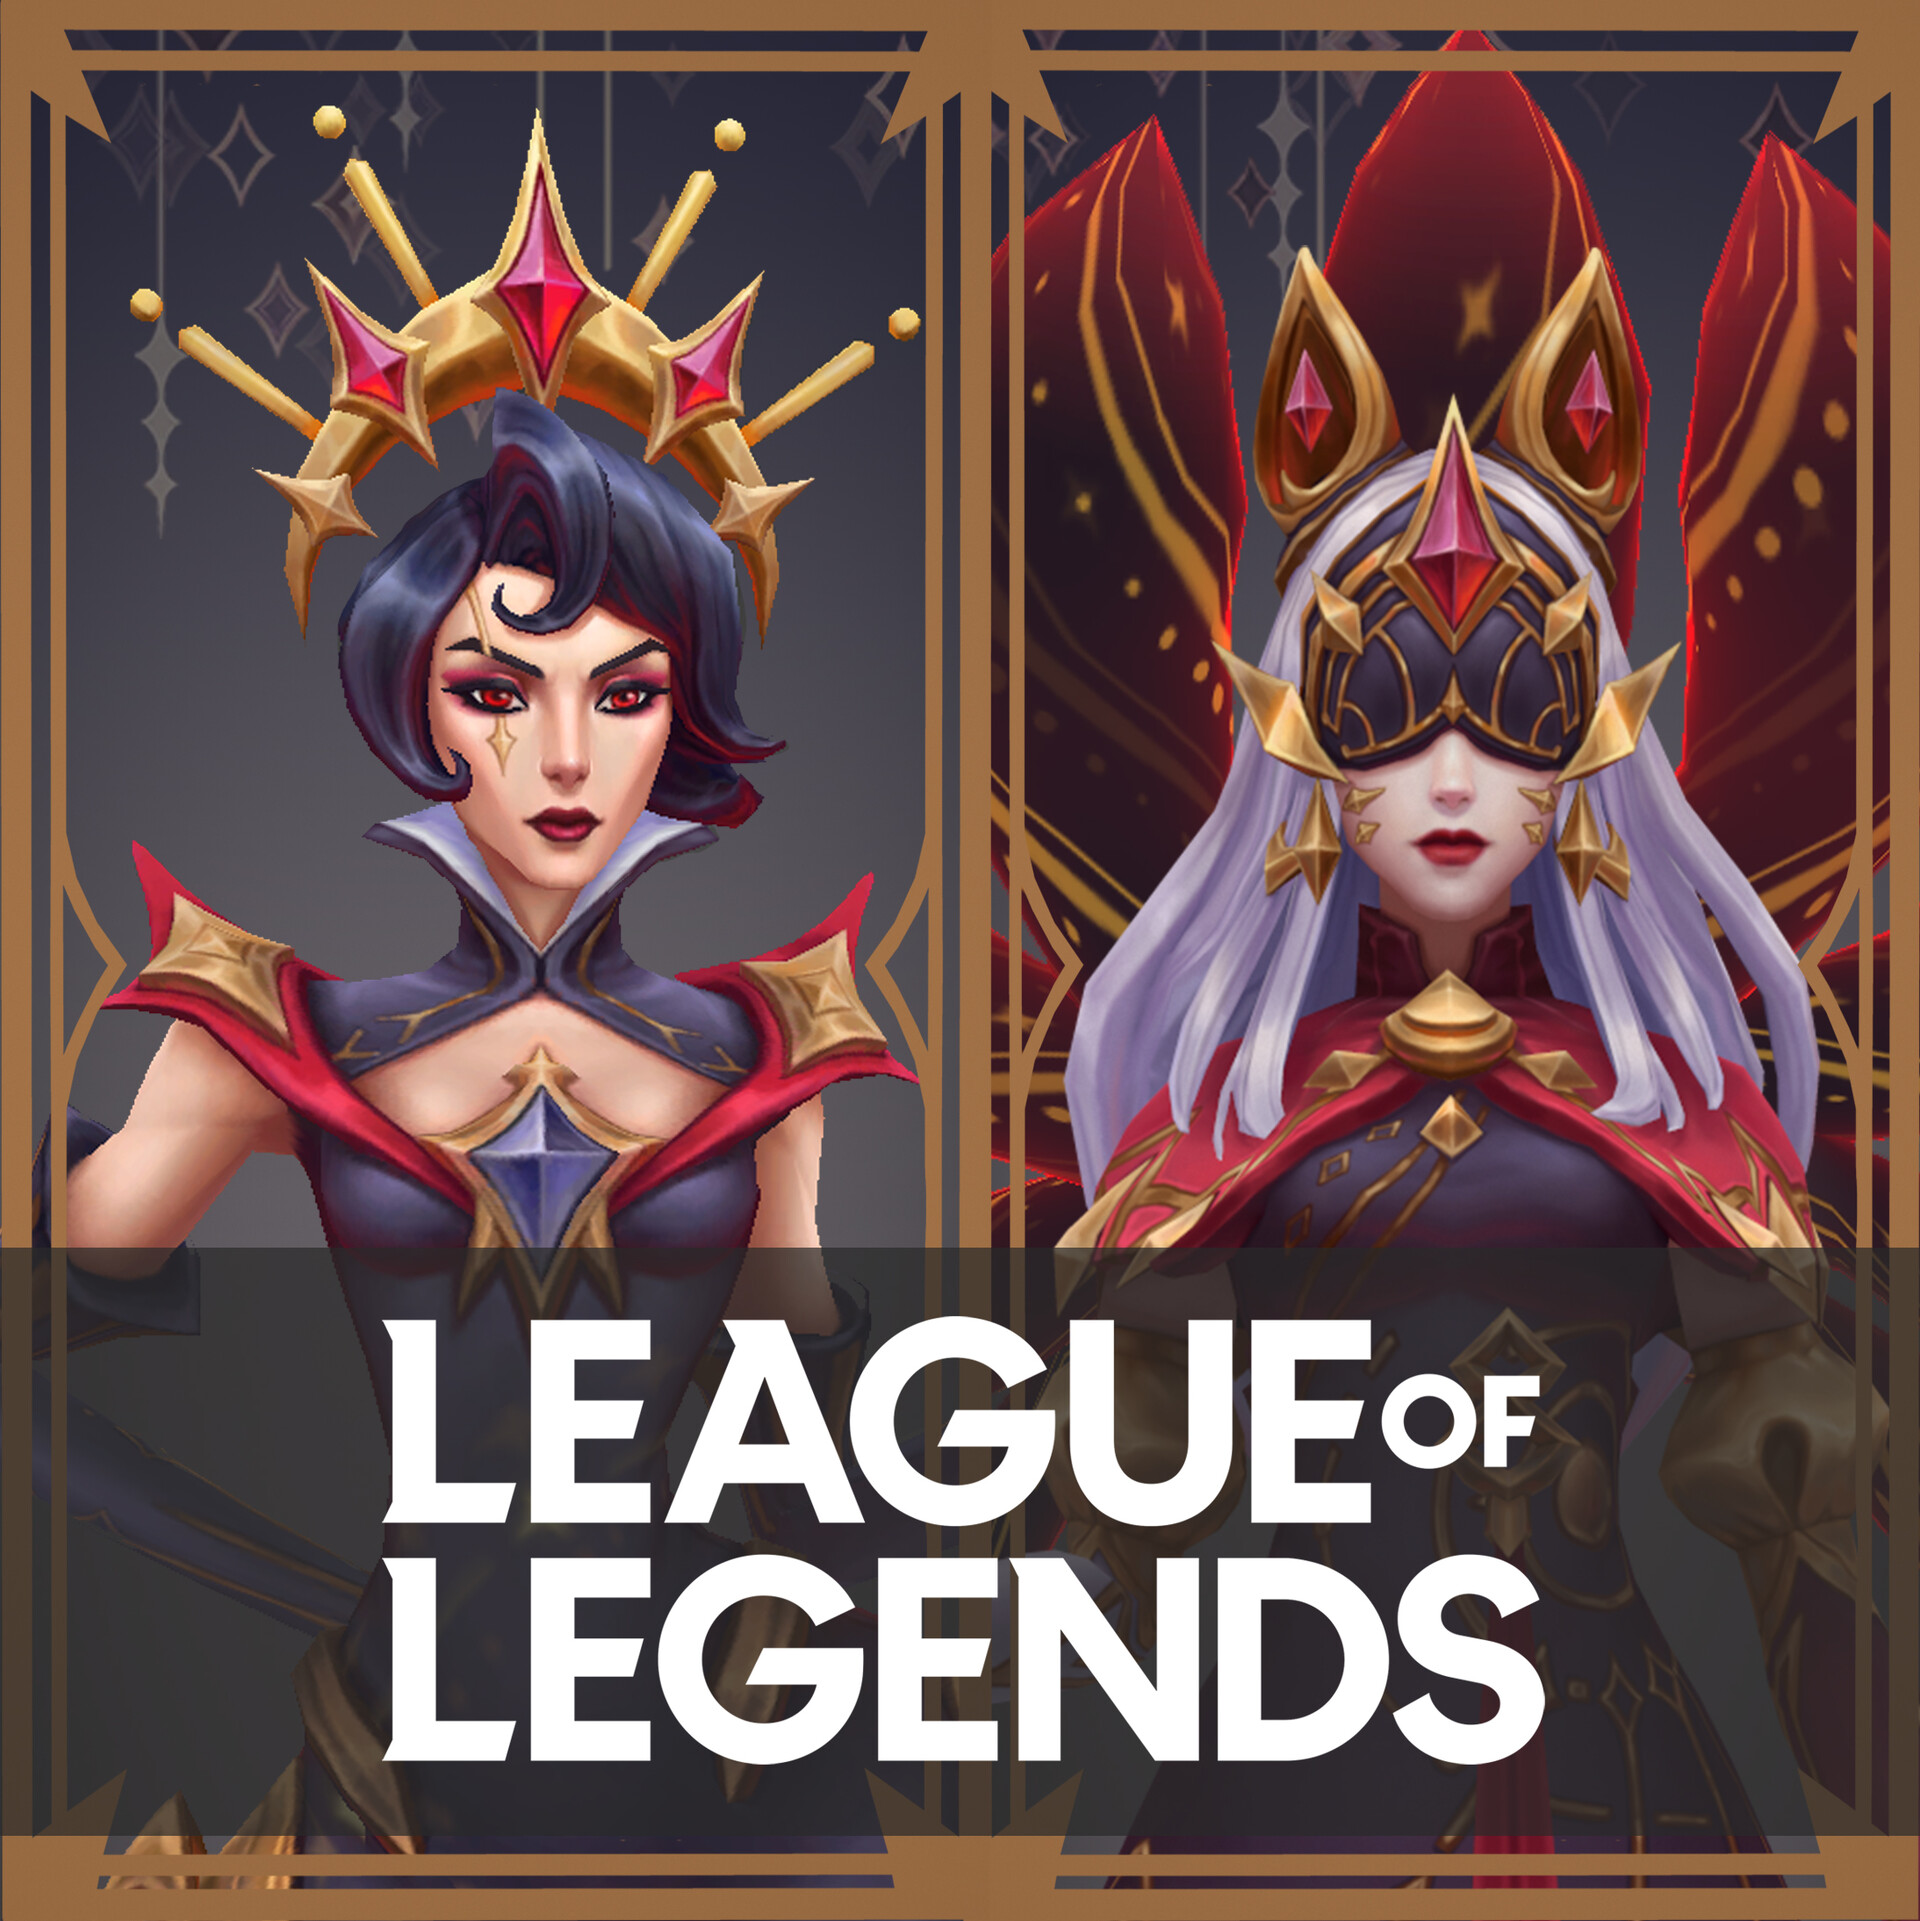 Program Camille Skin Spotlight - League of Legends 